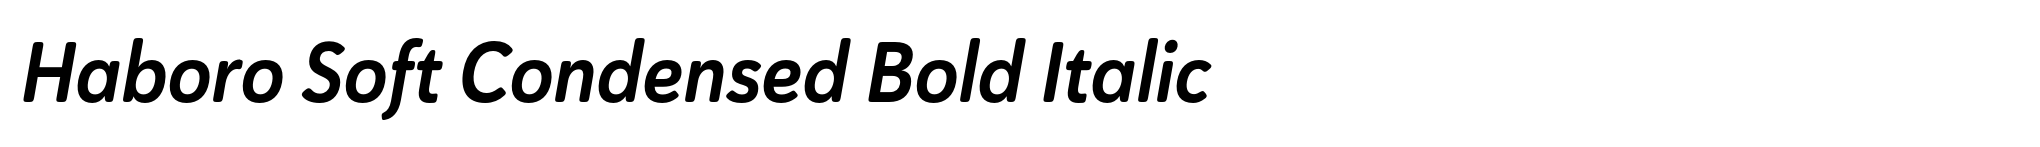 Haboro Soft Condensed Bold Italic image